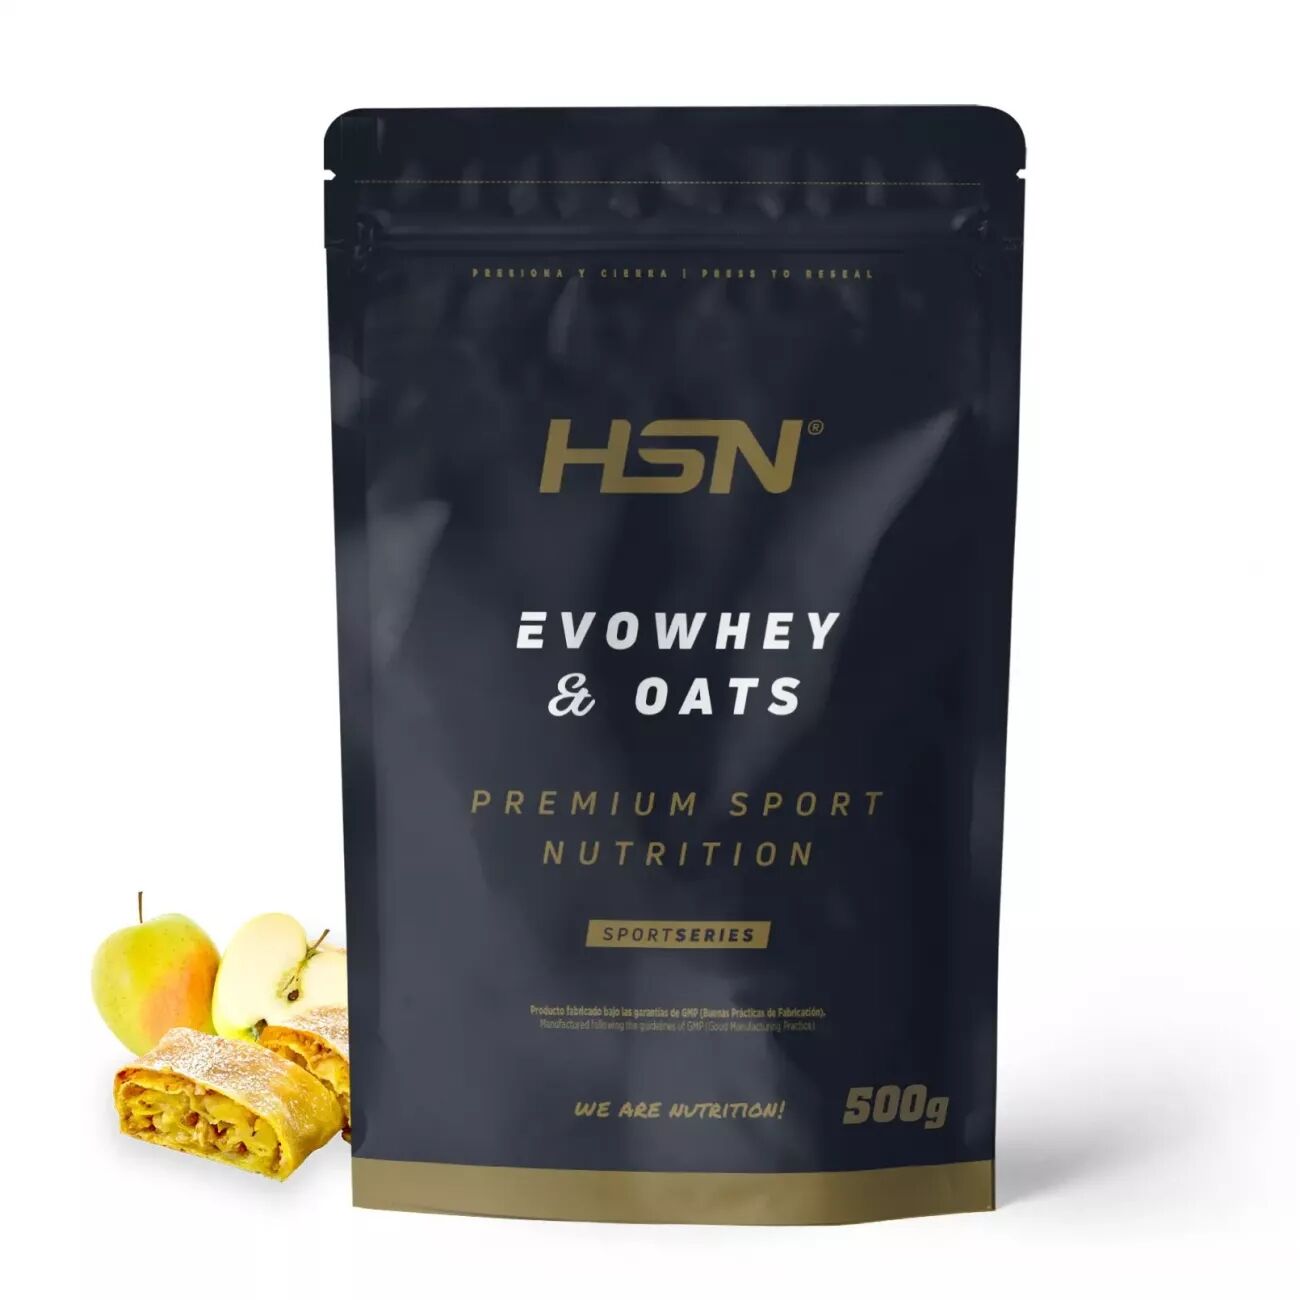 HSN Evowhey & oats 500g strudel de manzana